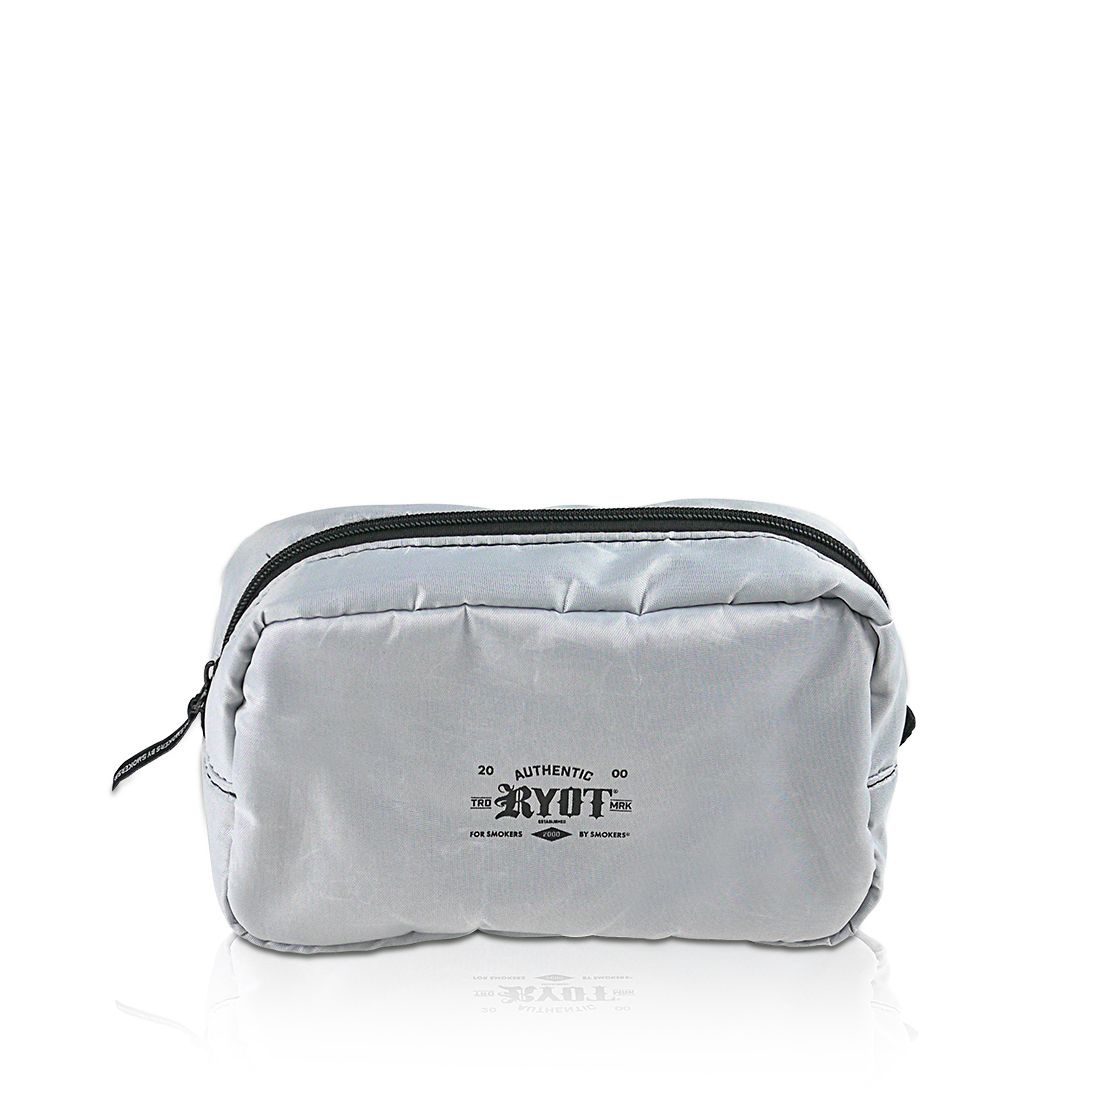 travel pouch white  retaW web store for overseas